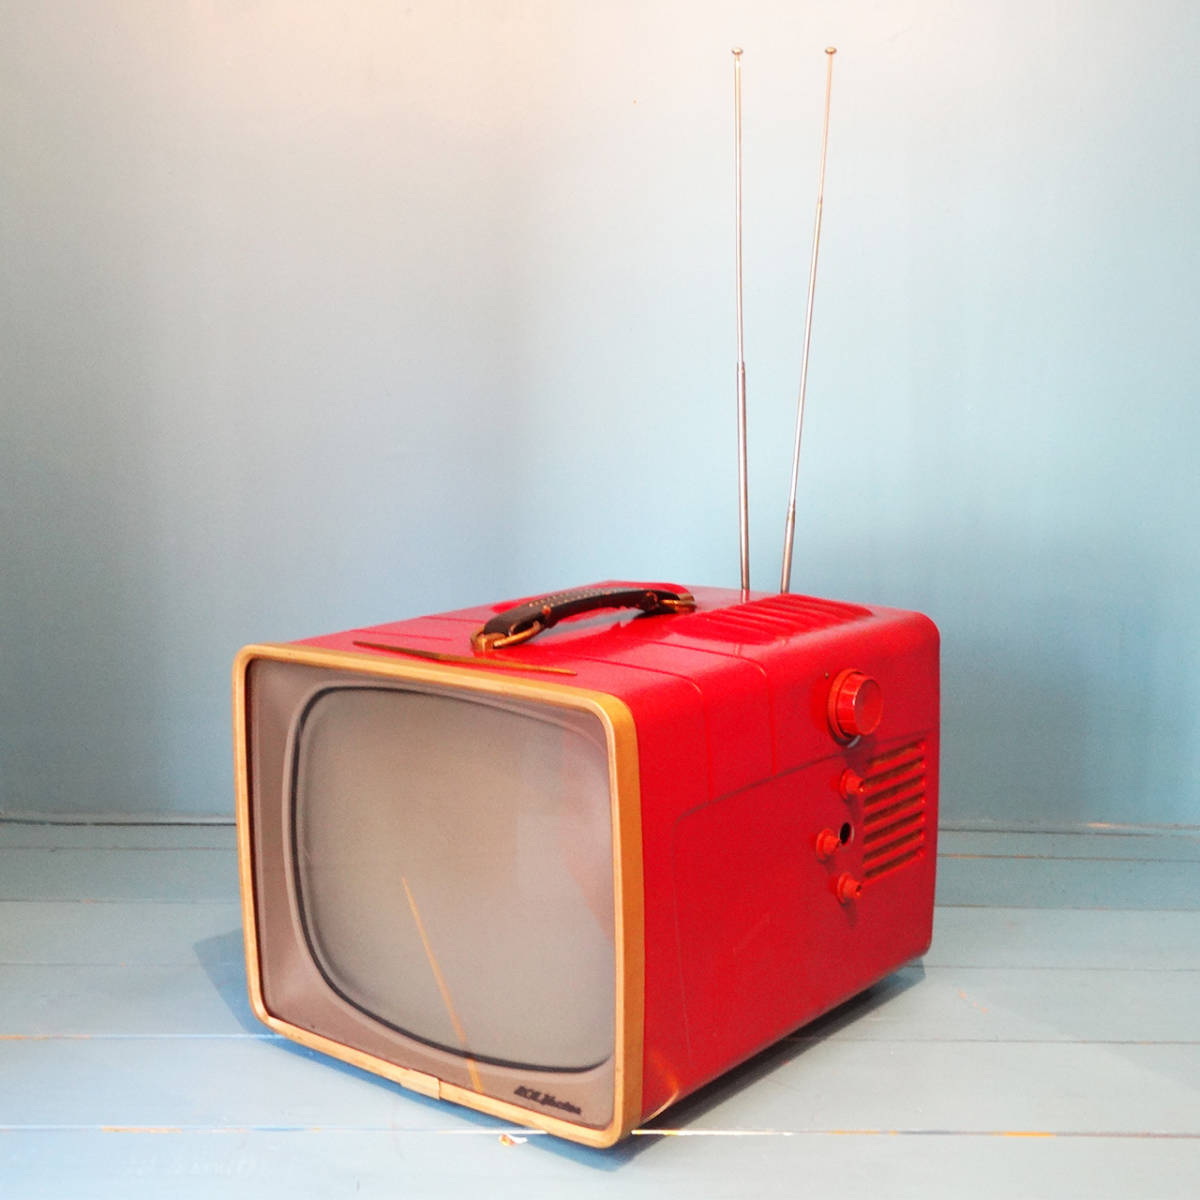 *1957s USA RCA Victor vintage wayfarer portable television